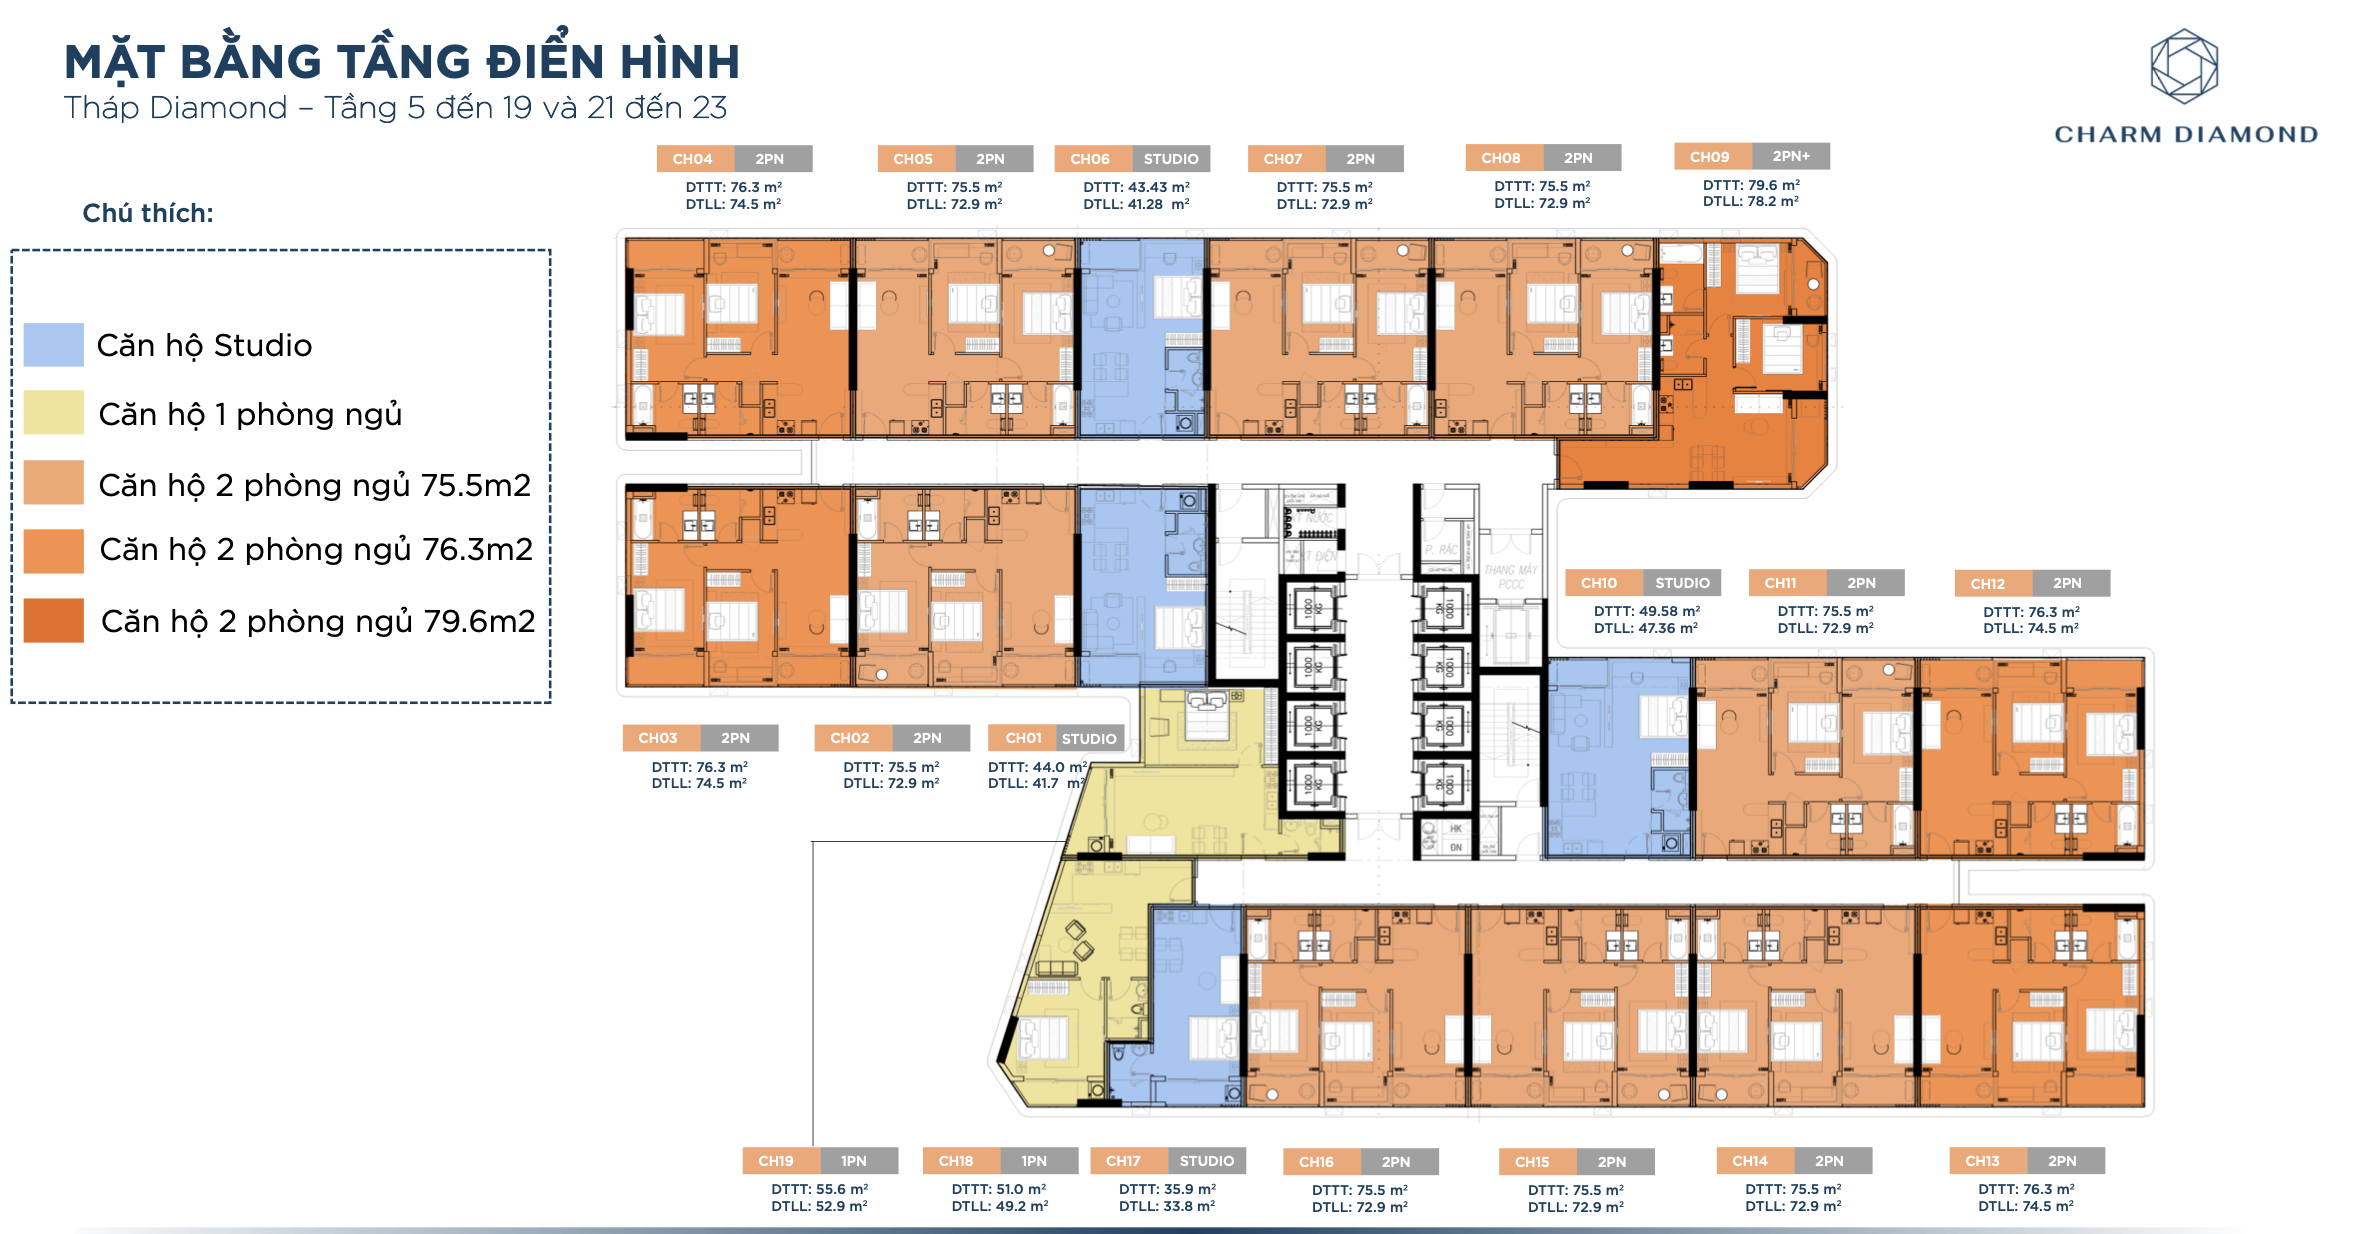 Overall plan of Charm Diamond Binh Duong apartment block